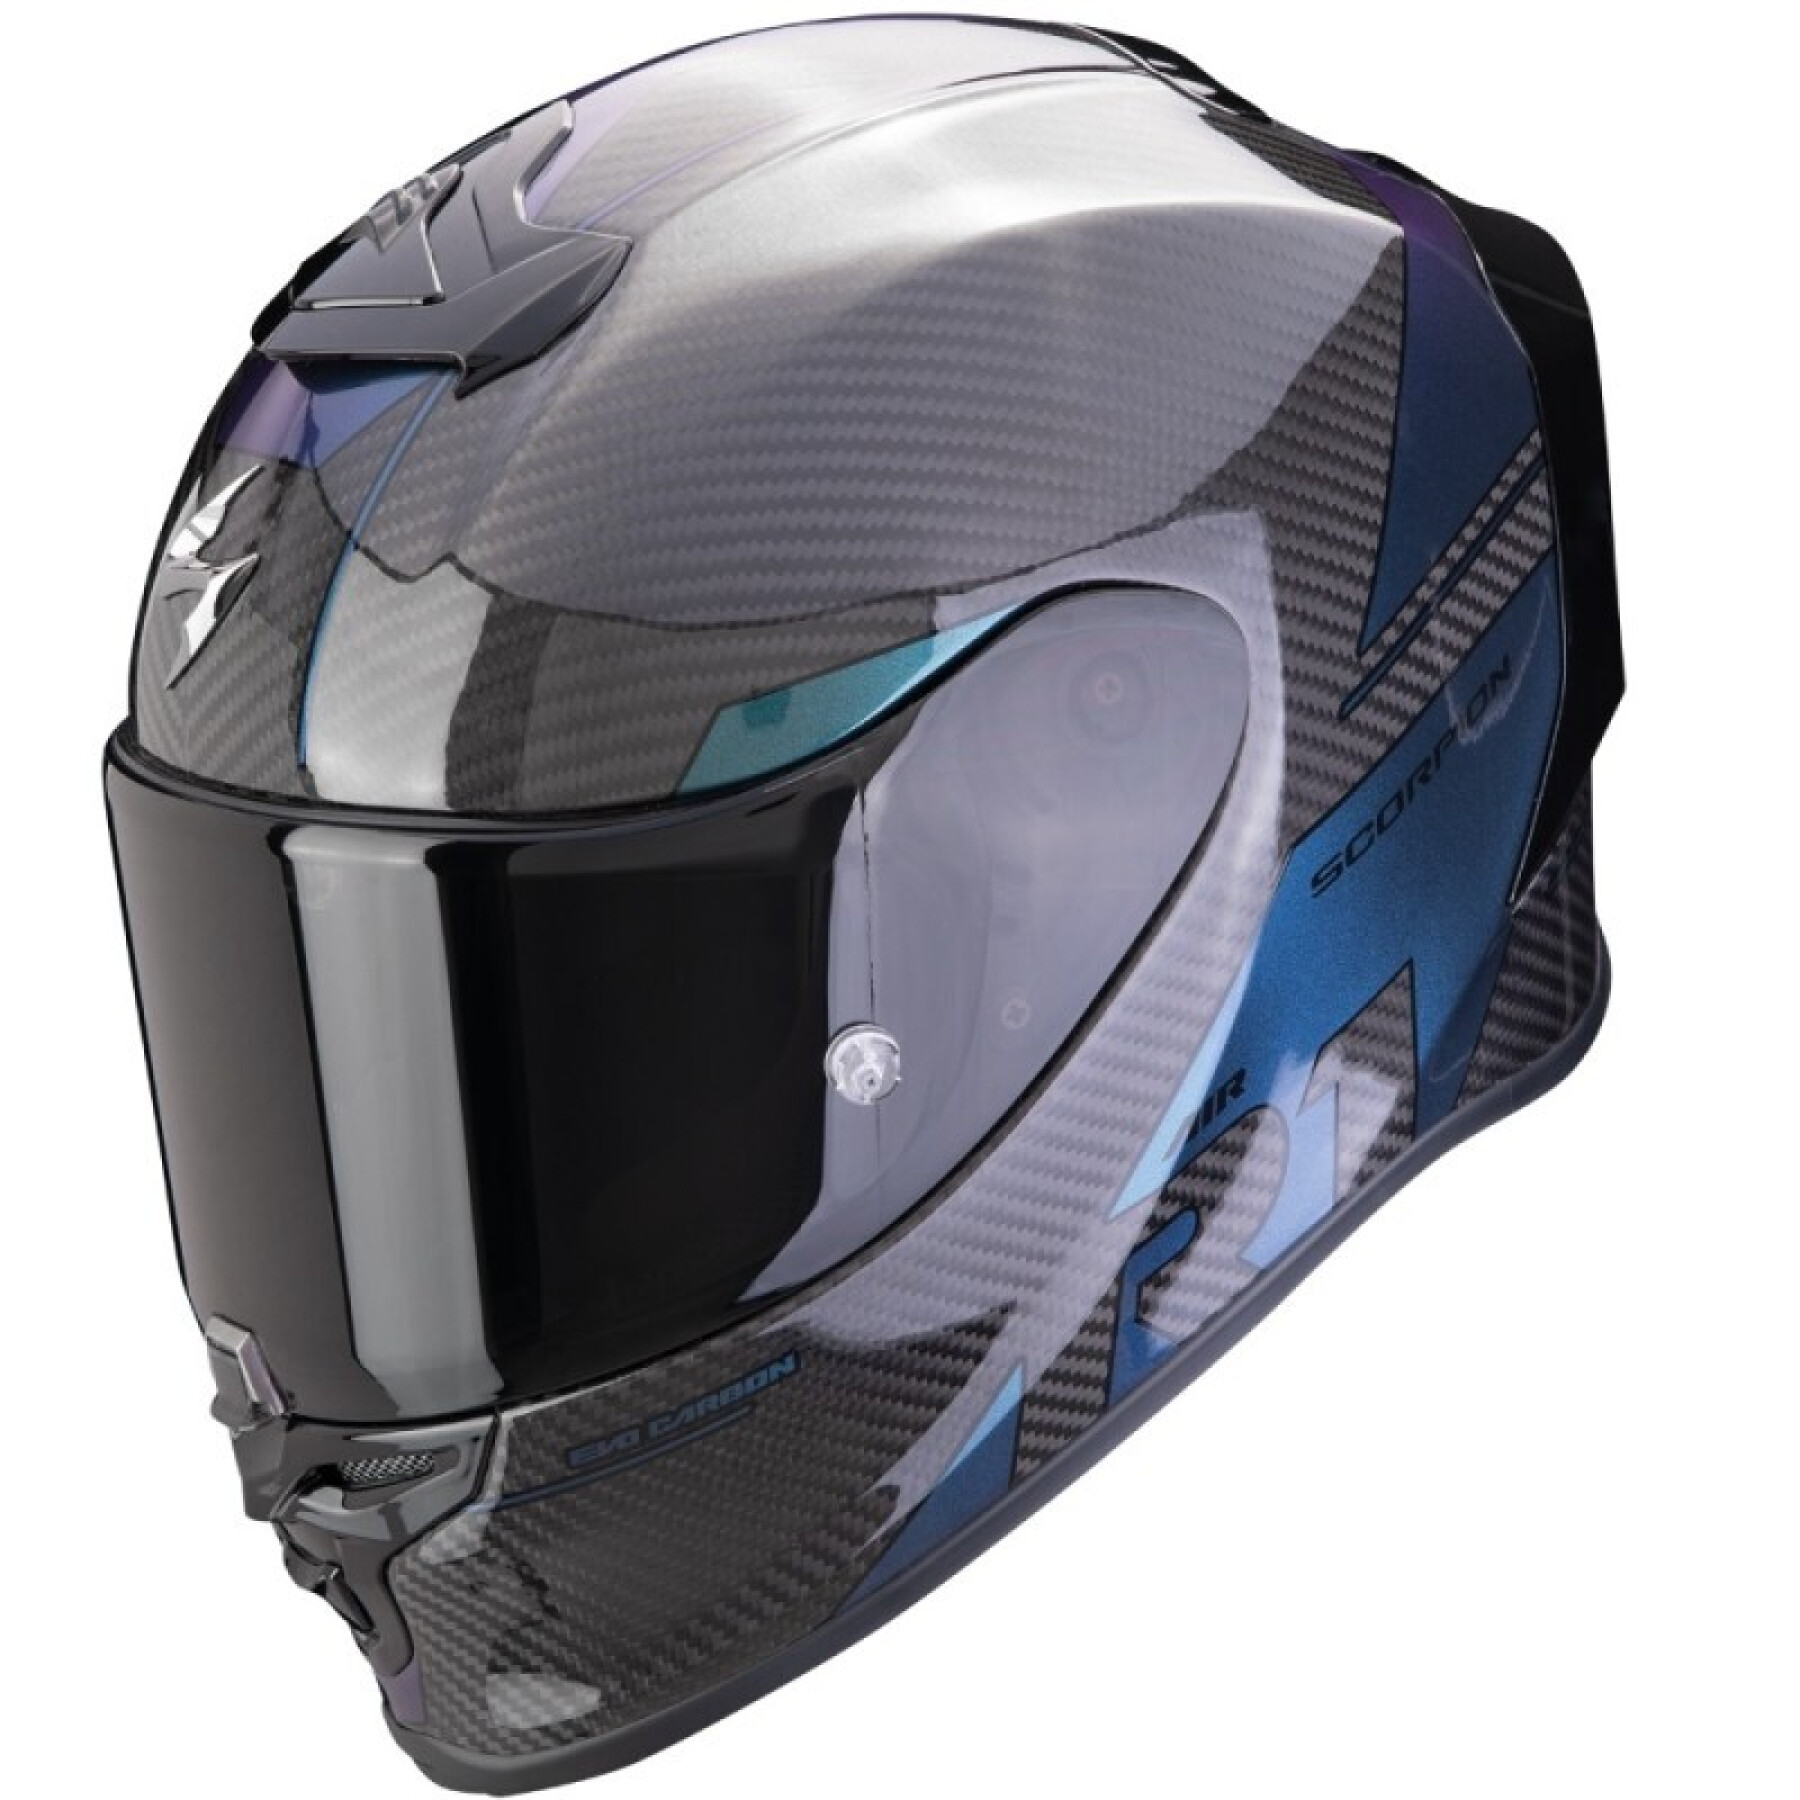 Full face motorcycle helmet Scorpion Exo-R1 Evo Carbon Air Rally